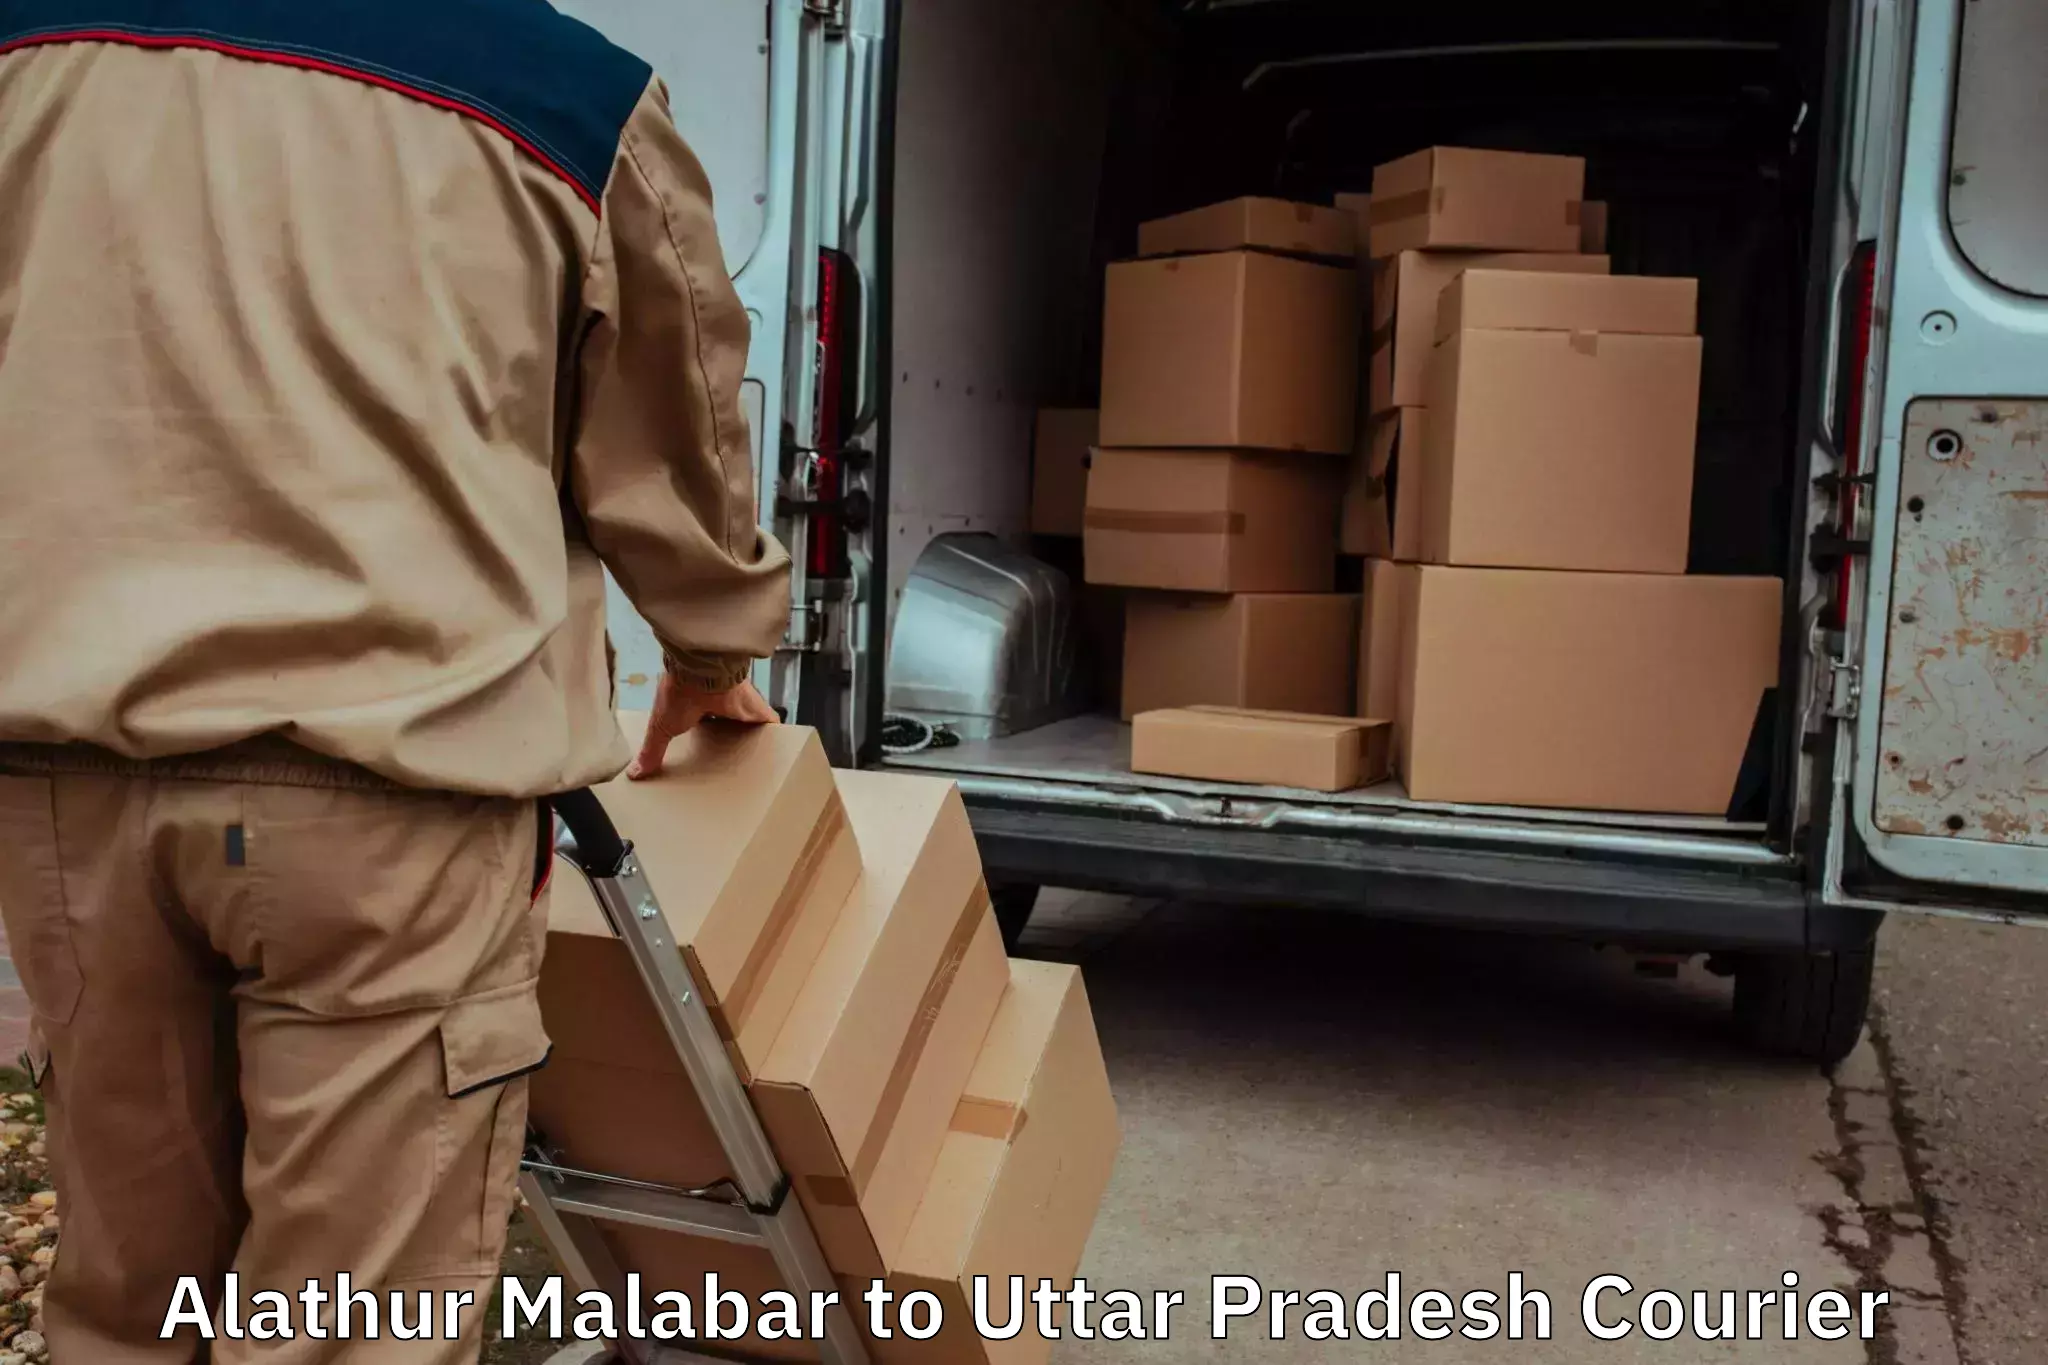 Stress-free moving Alathur Malabar to Mathura